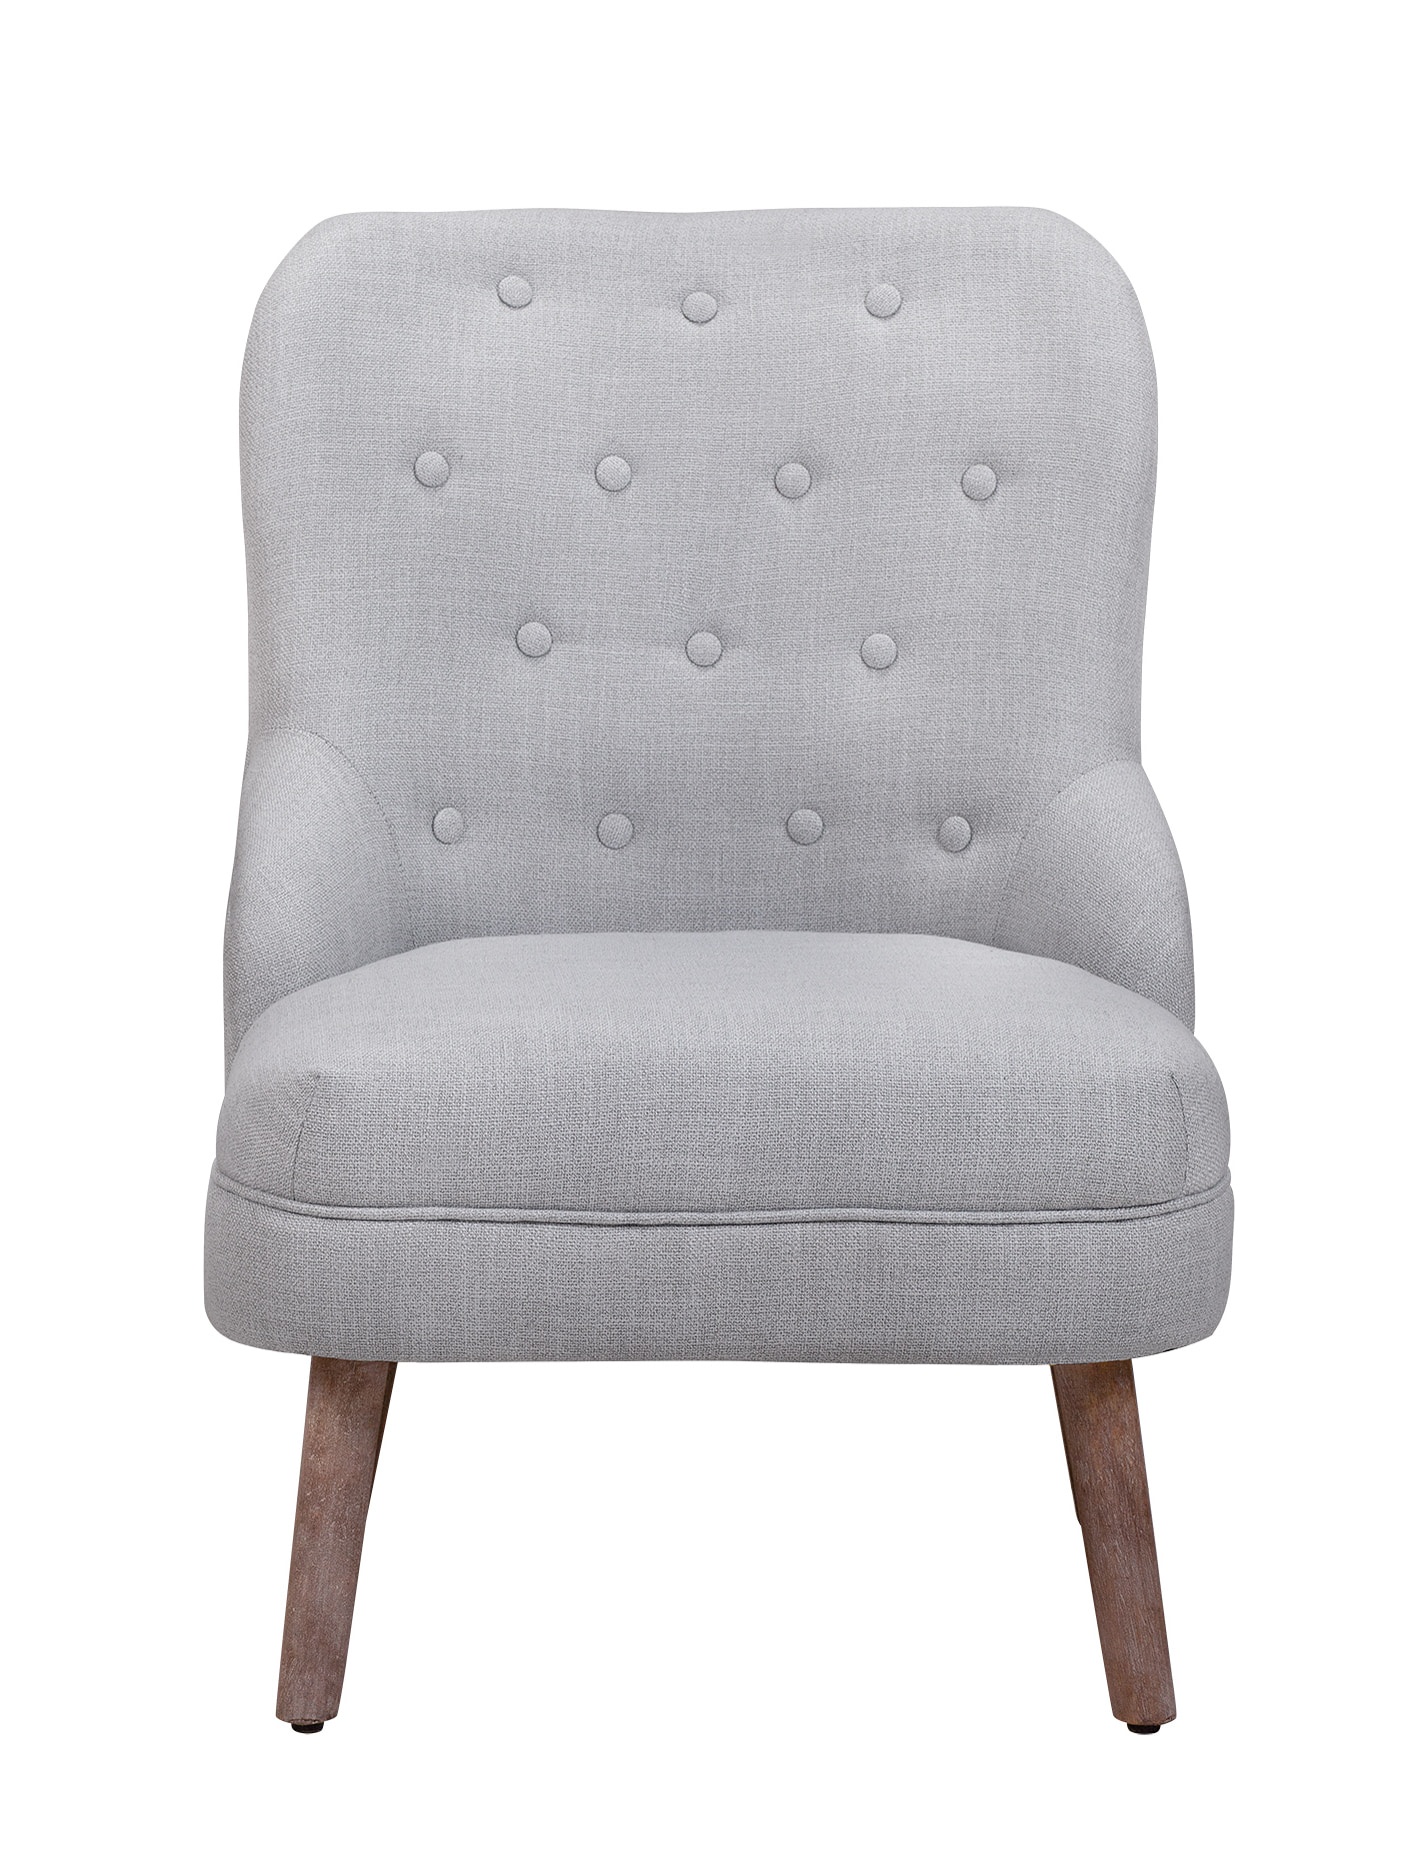 Кресло erwin gray mak-interior серый 64x89x64 см.